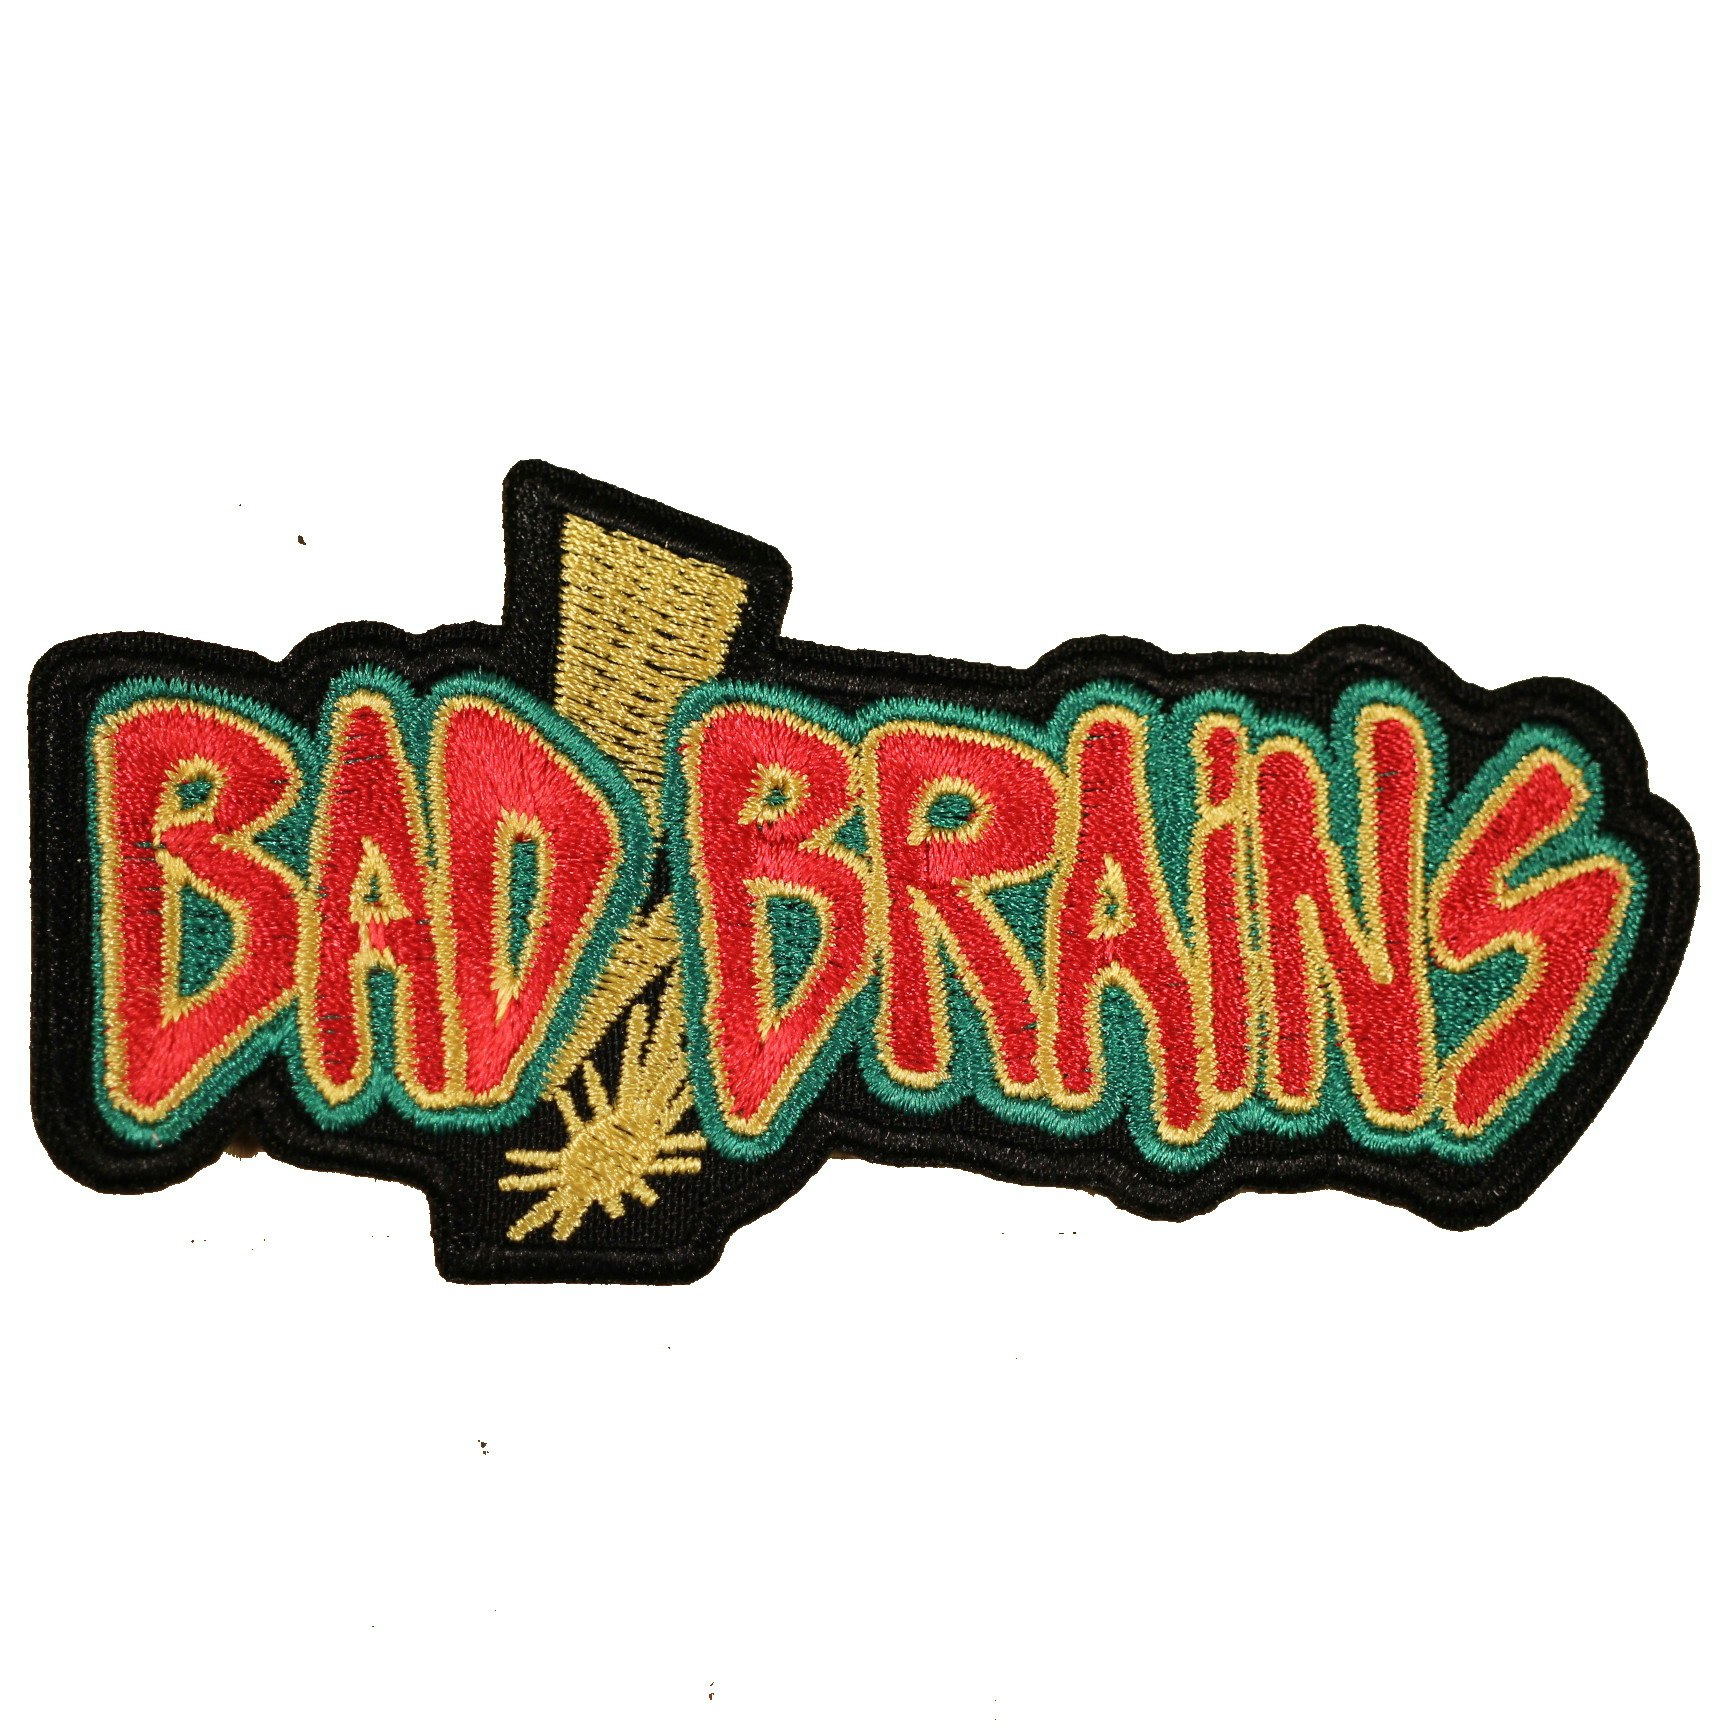 Bad brains logo patch